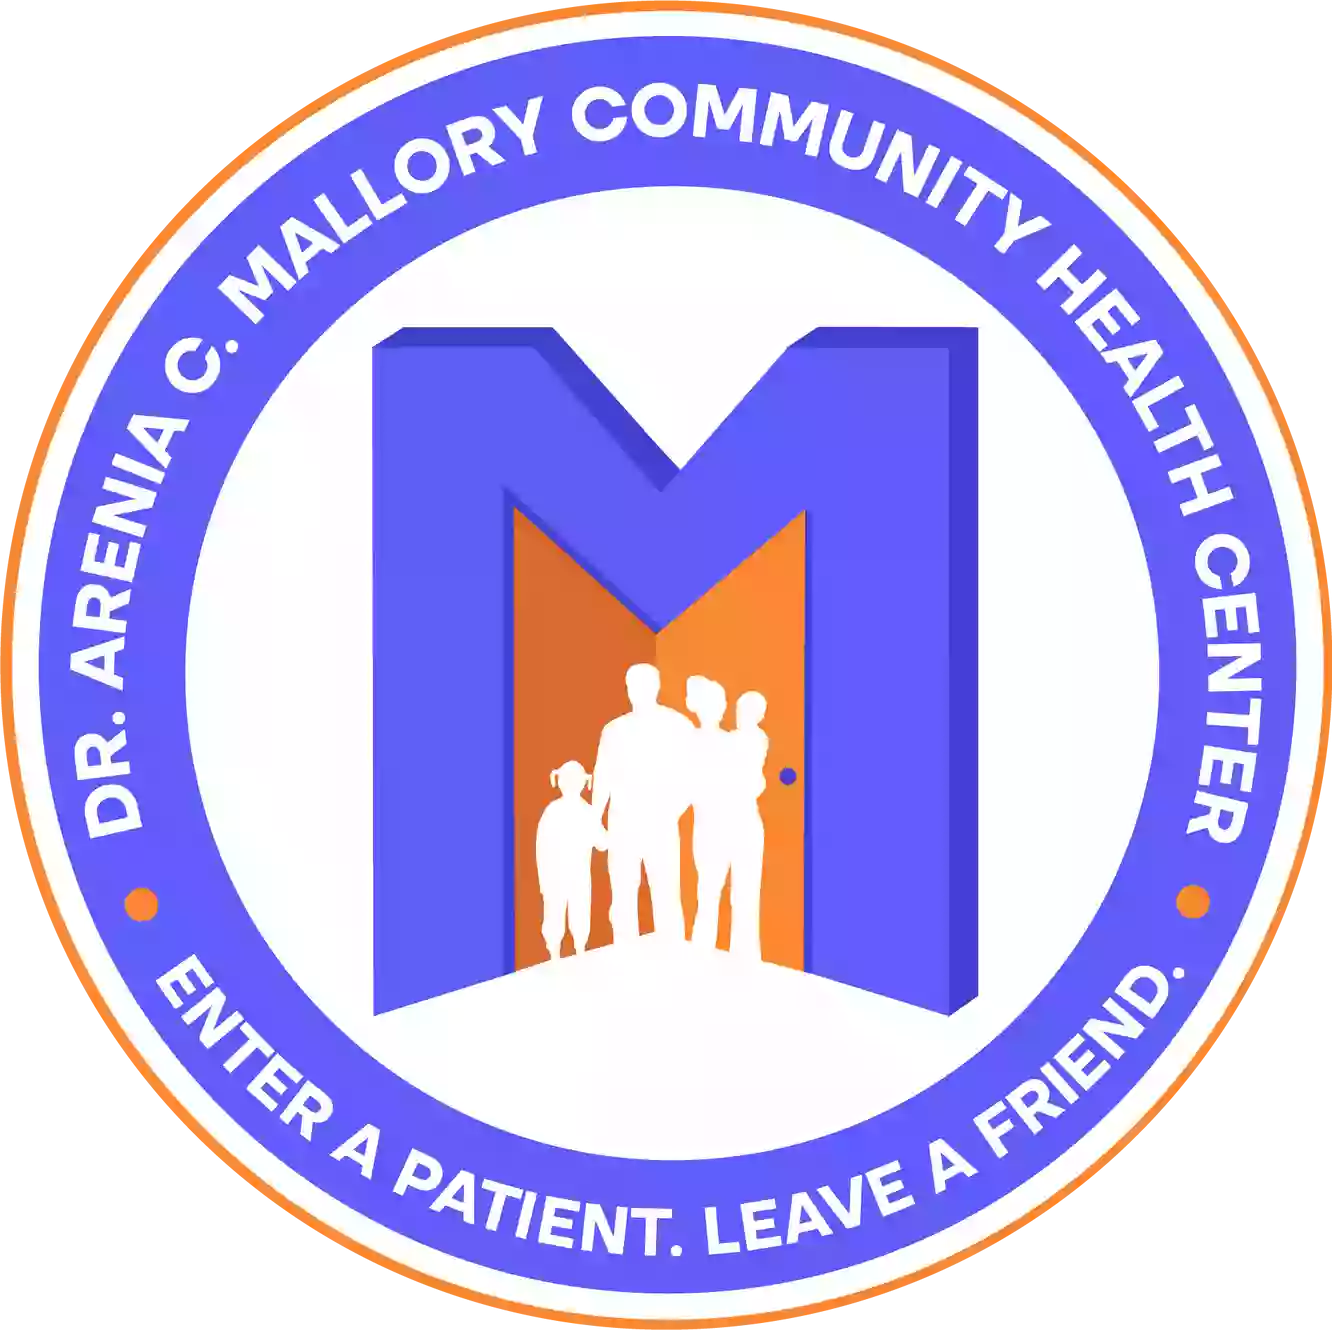 Mallory Community Health Center